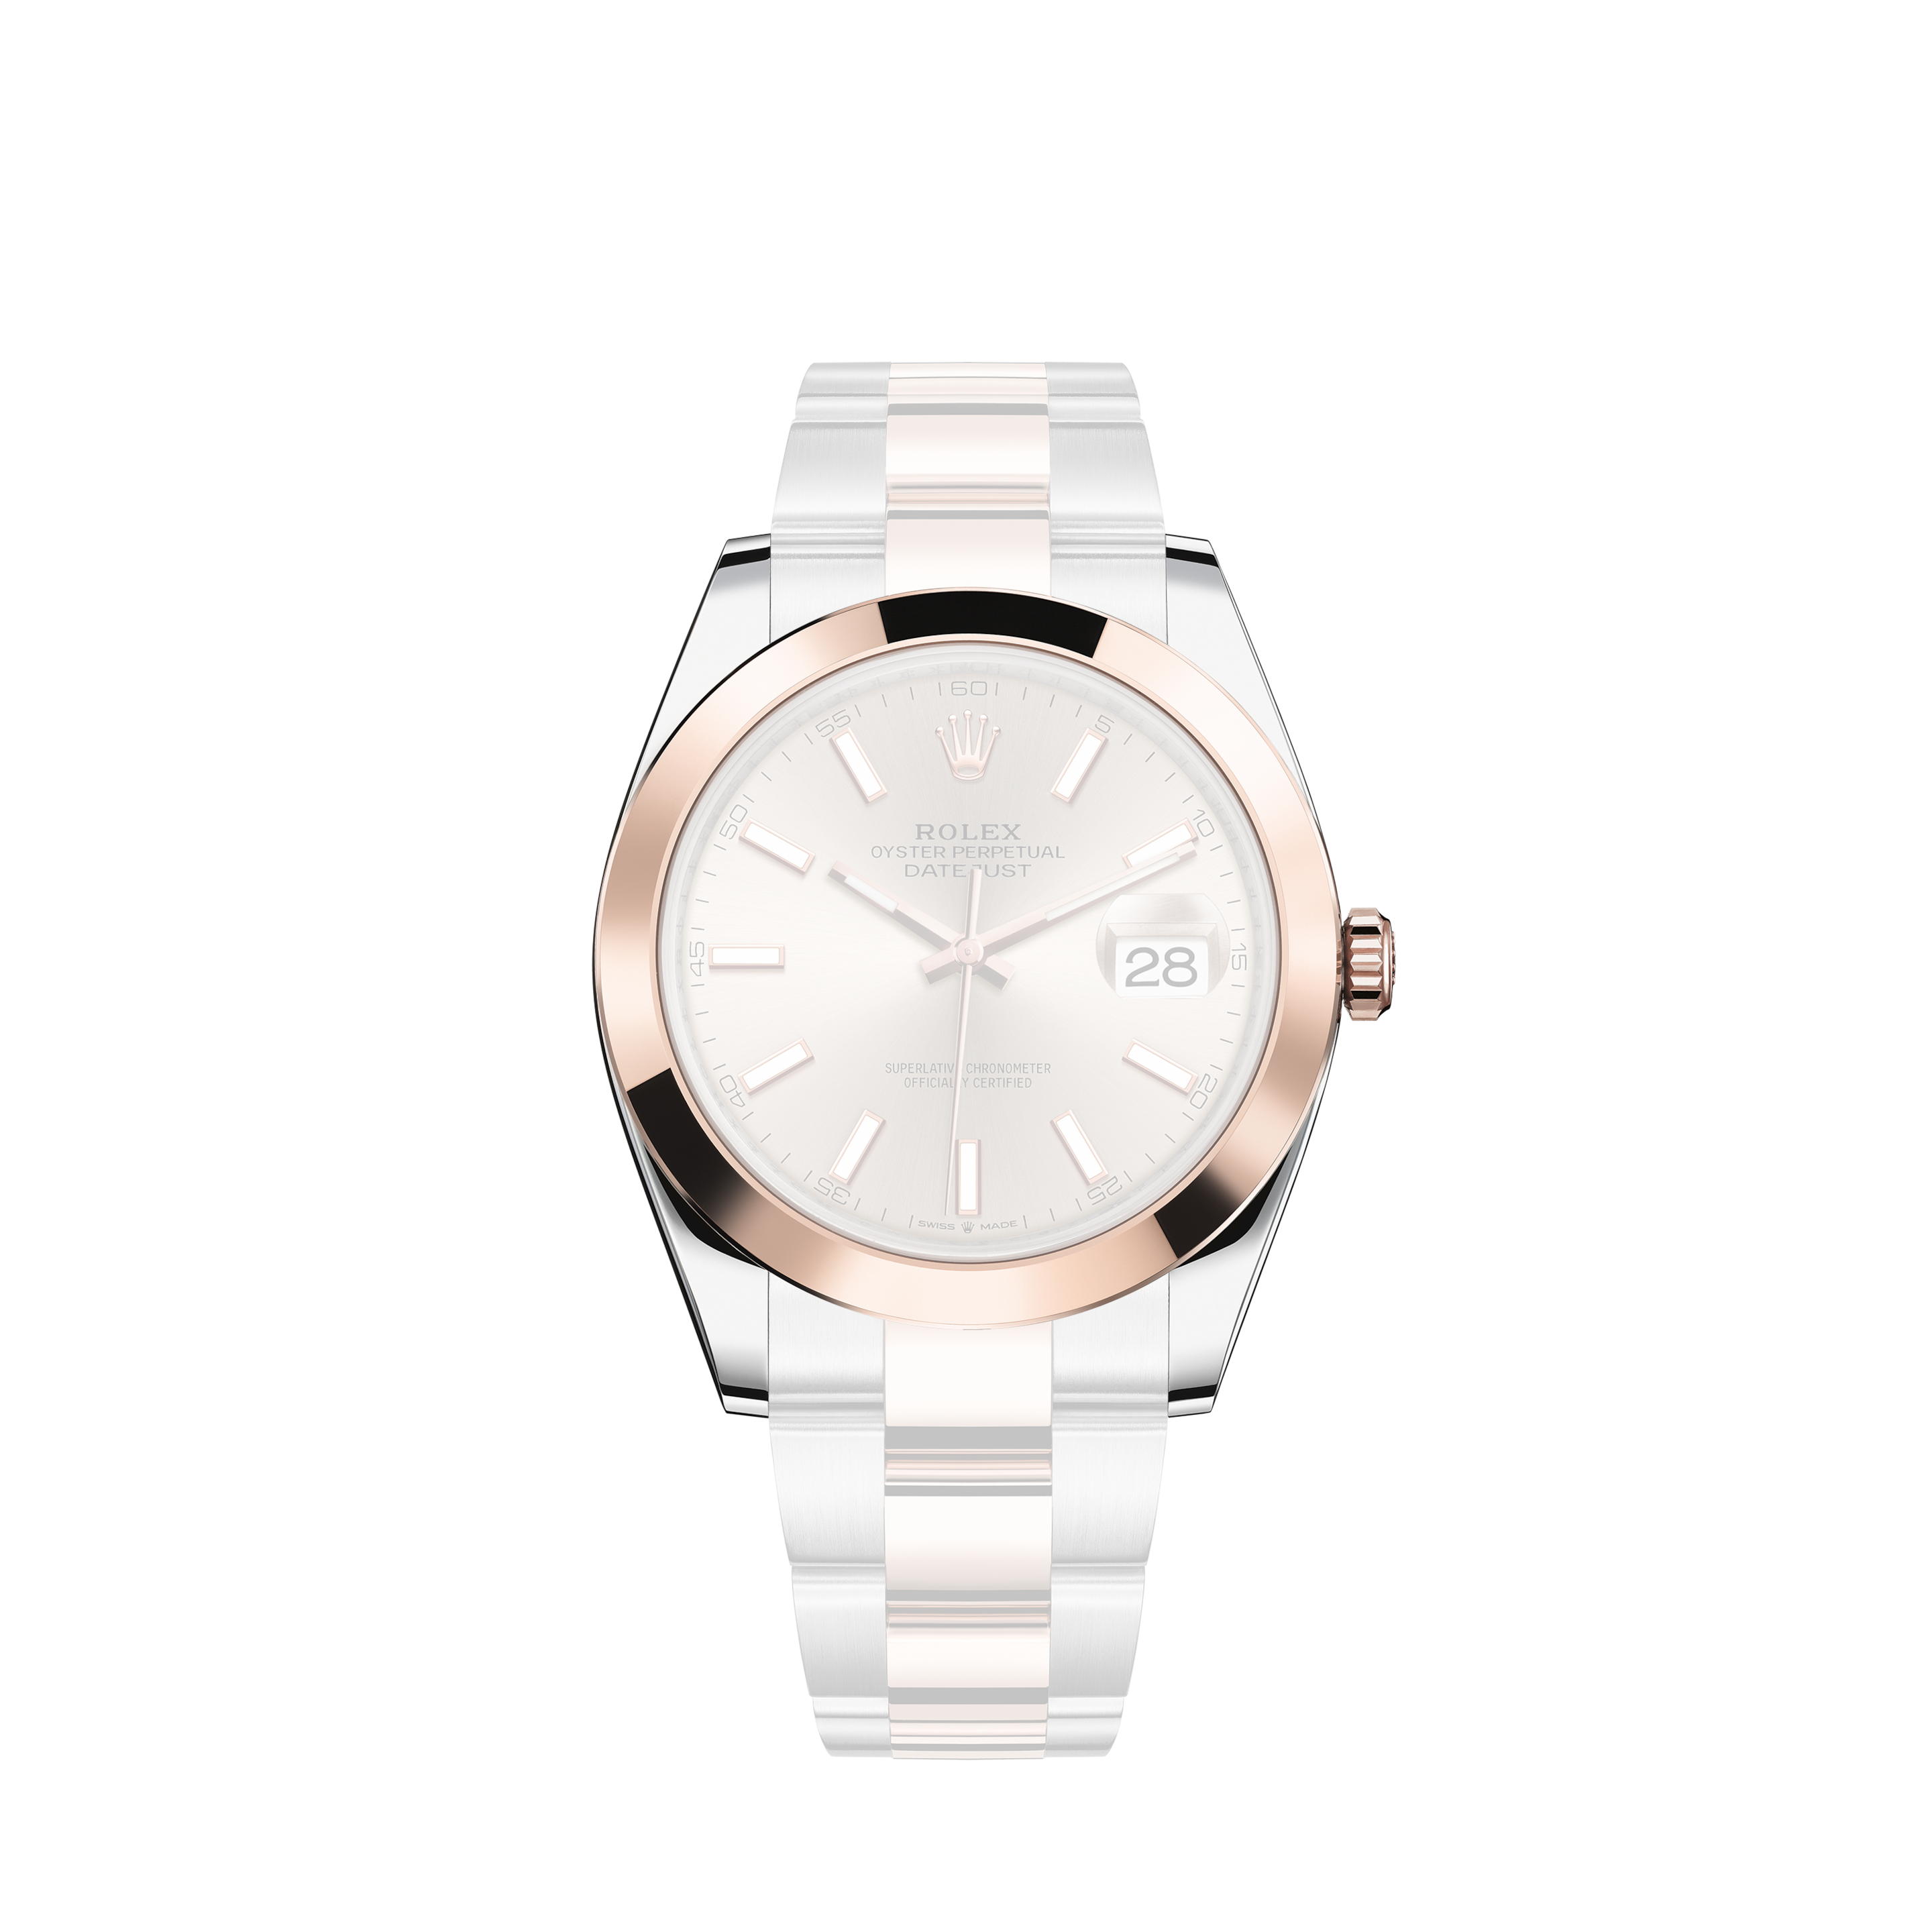 Rolex Datejust 41mm silver dial oyster bracelet REF#126300